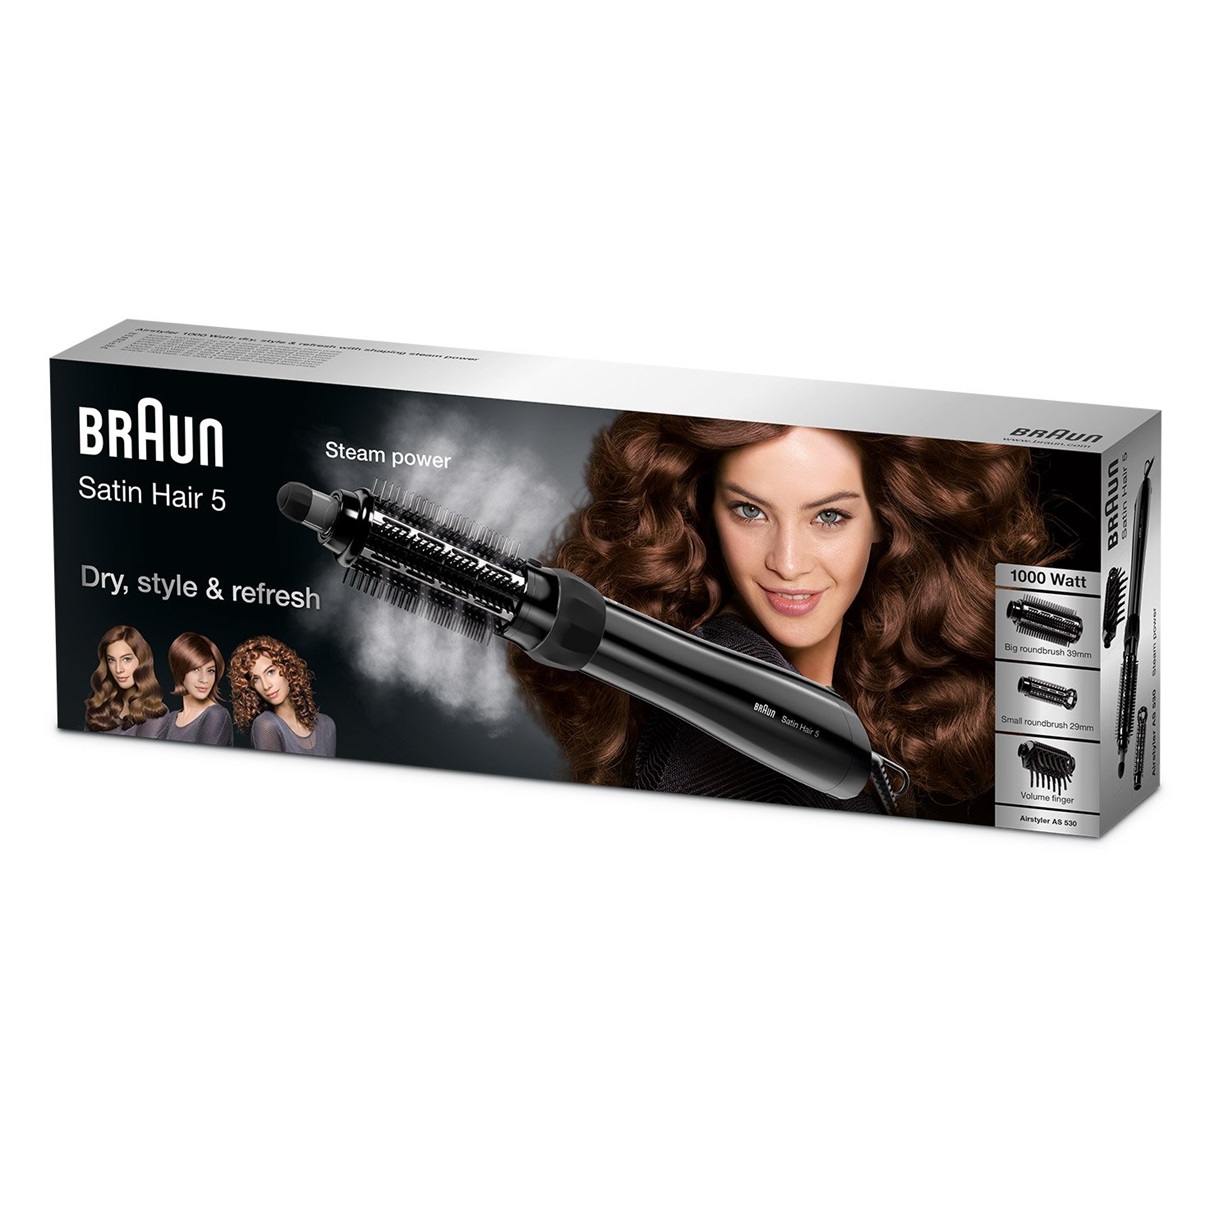 Braun Satin Hair 5 Air styler with style refreshing steam